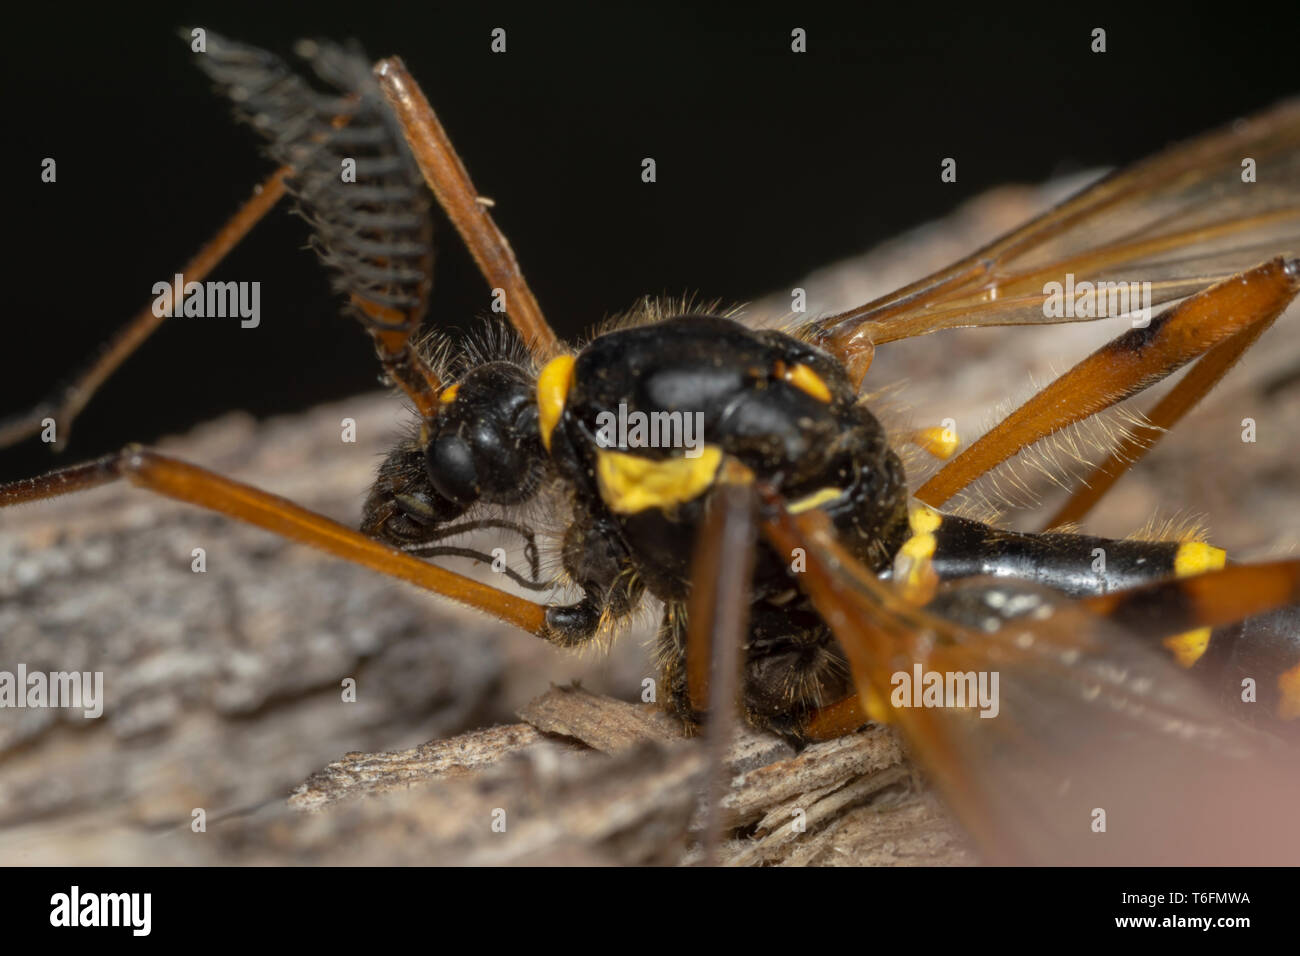 Cranefly mímica, la avispa macho (lat. Ctenophora flaveolata) Foto de stock